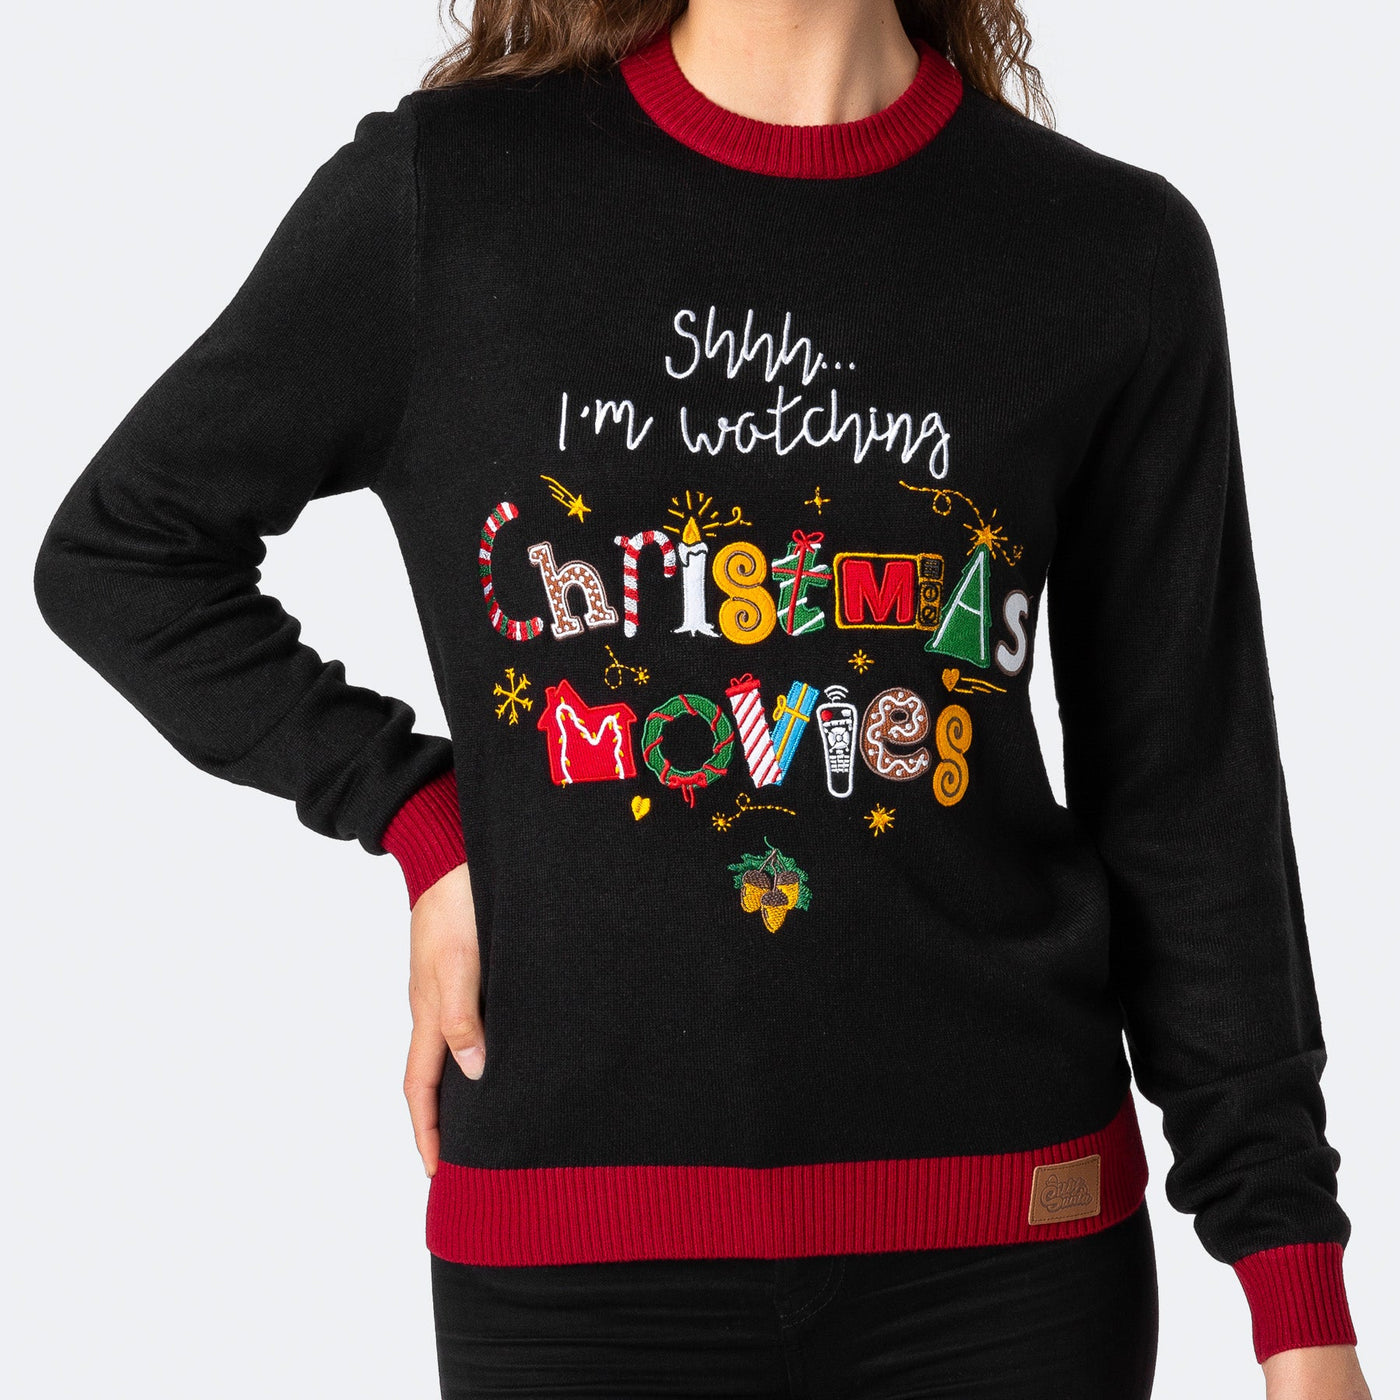 Women's Christmas Movies Christmas Sweater